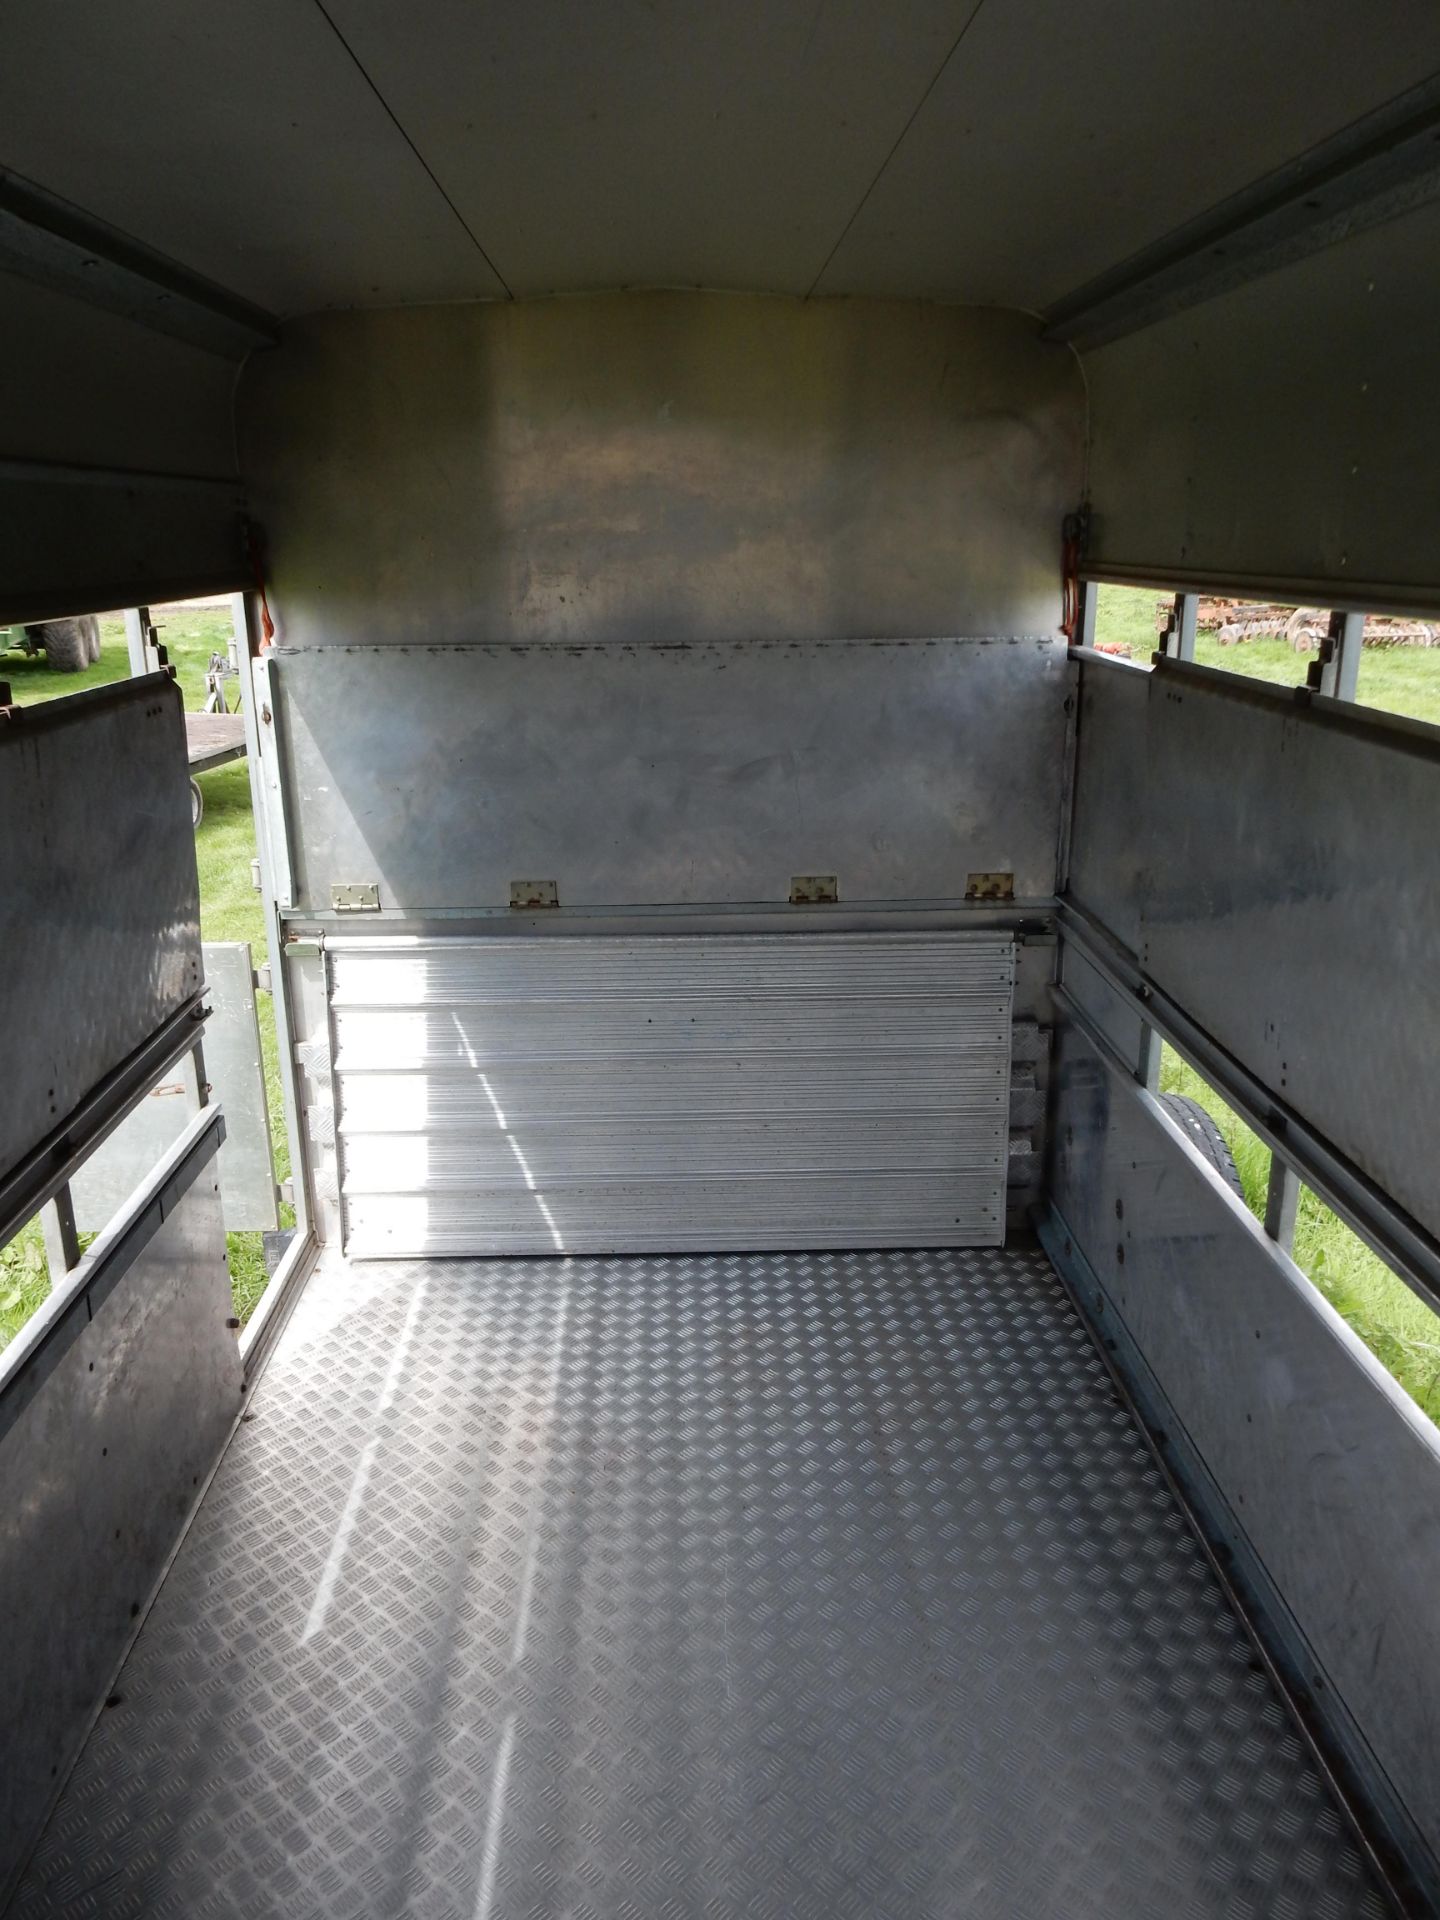 Ifor Williams TA5 10G 12 12ft cattle trailer,